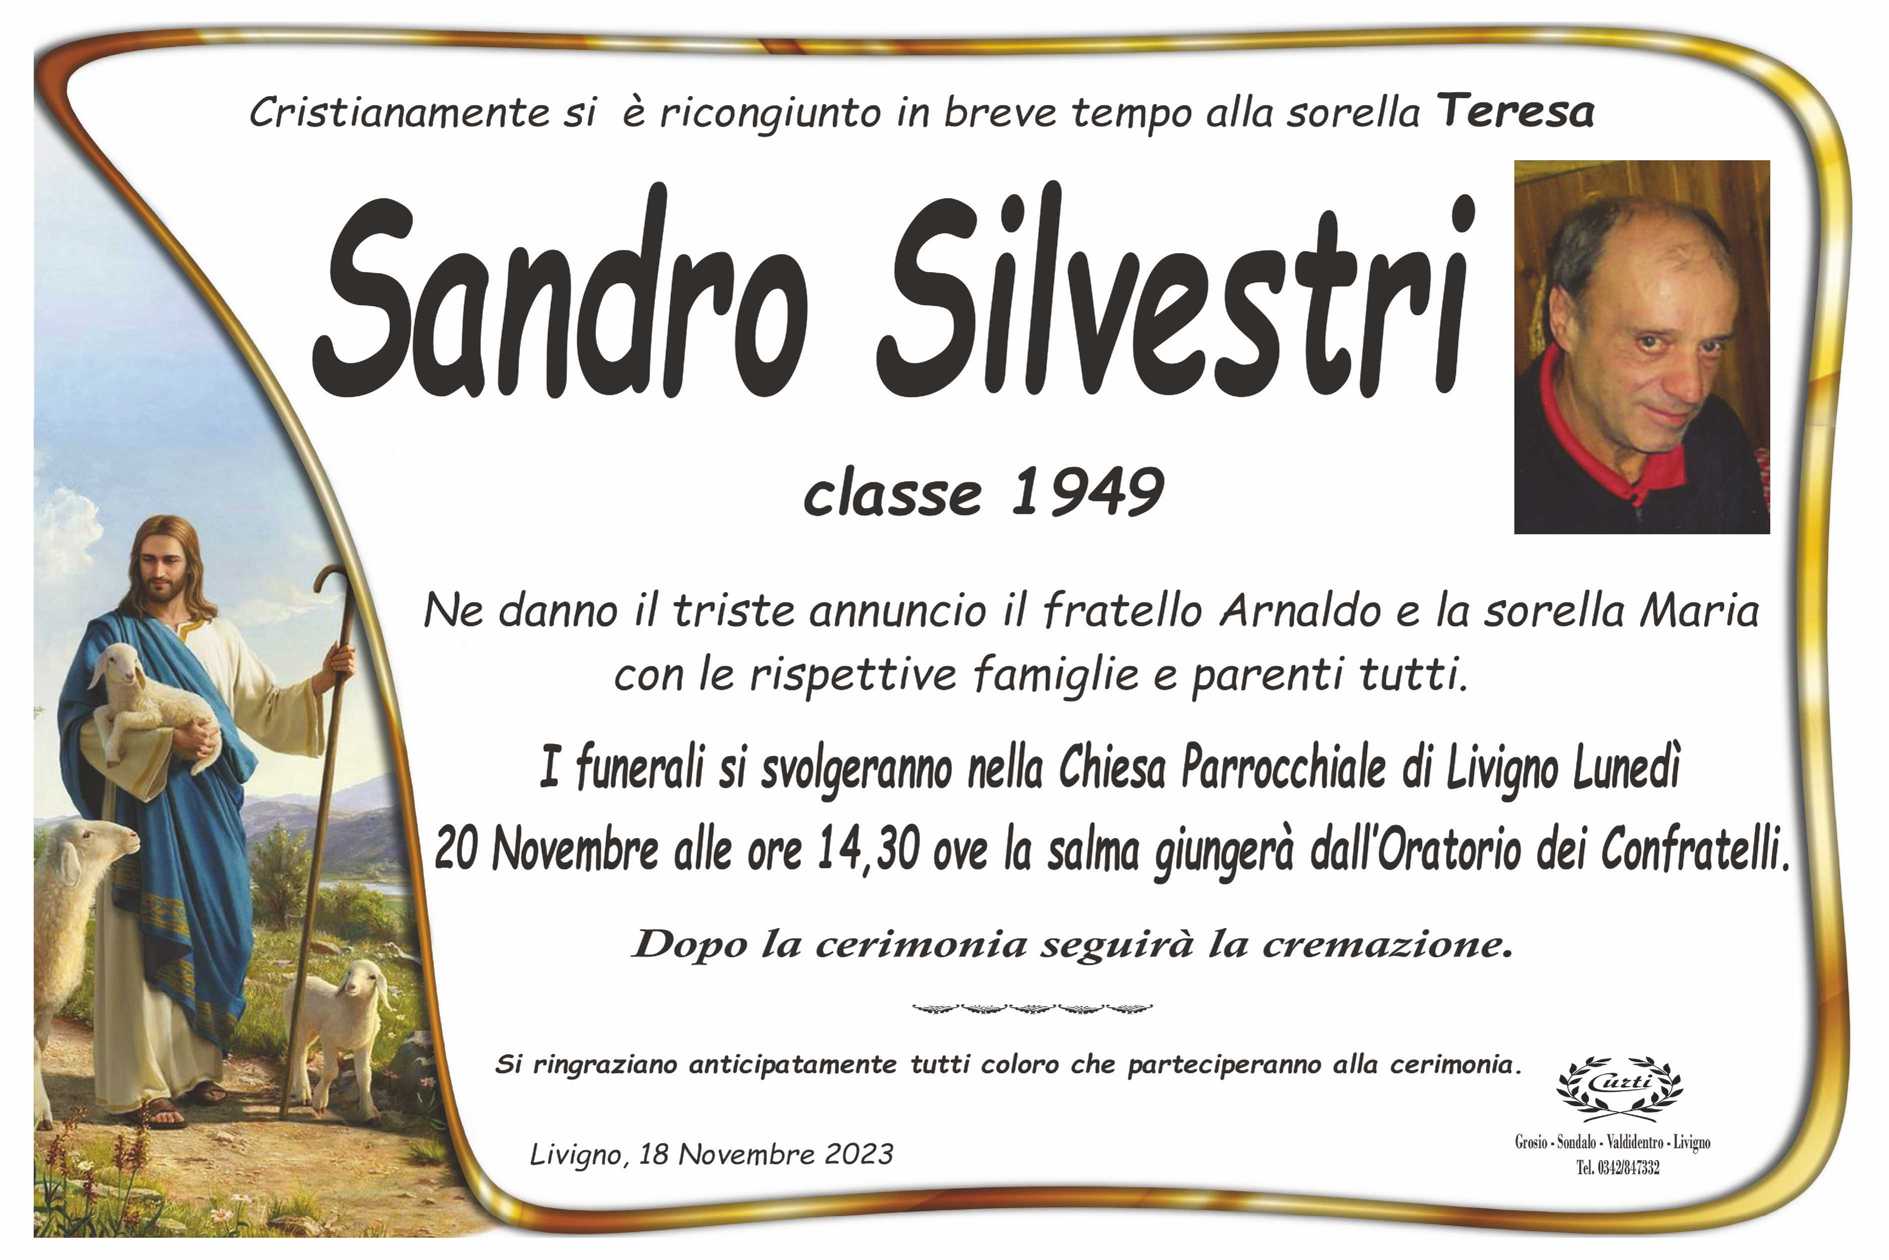 /silvestri sandro classe 1949